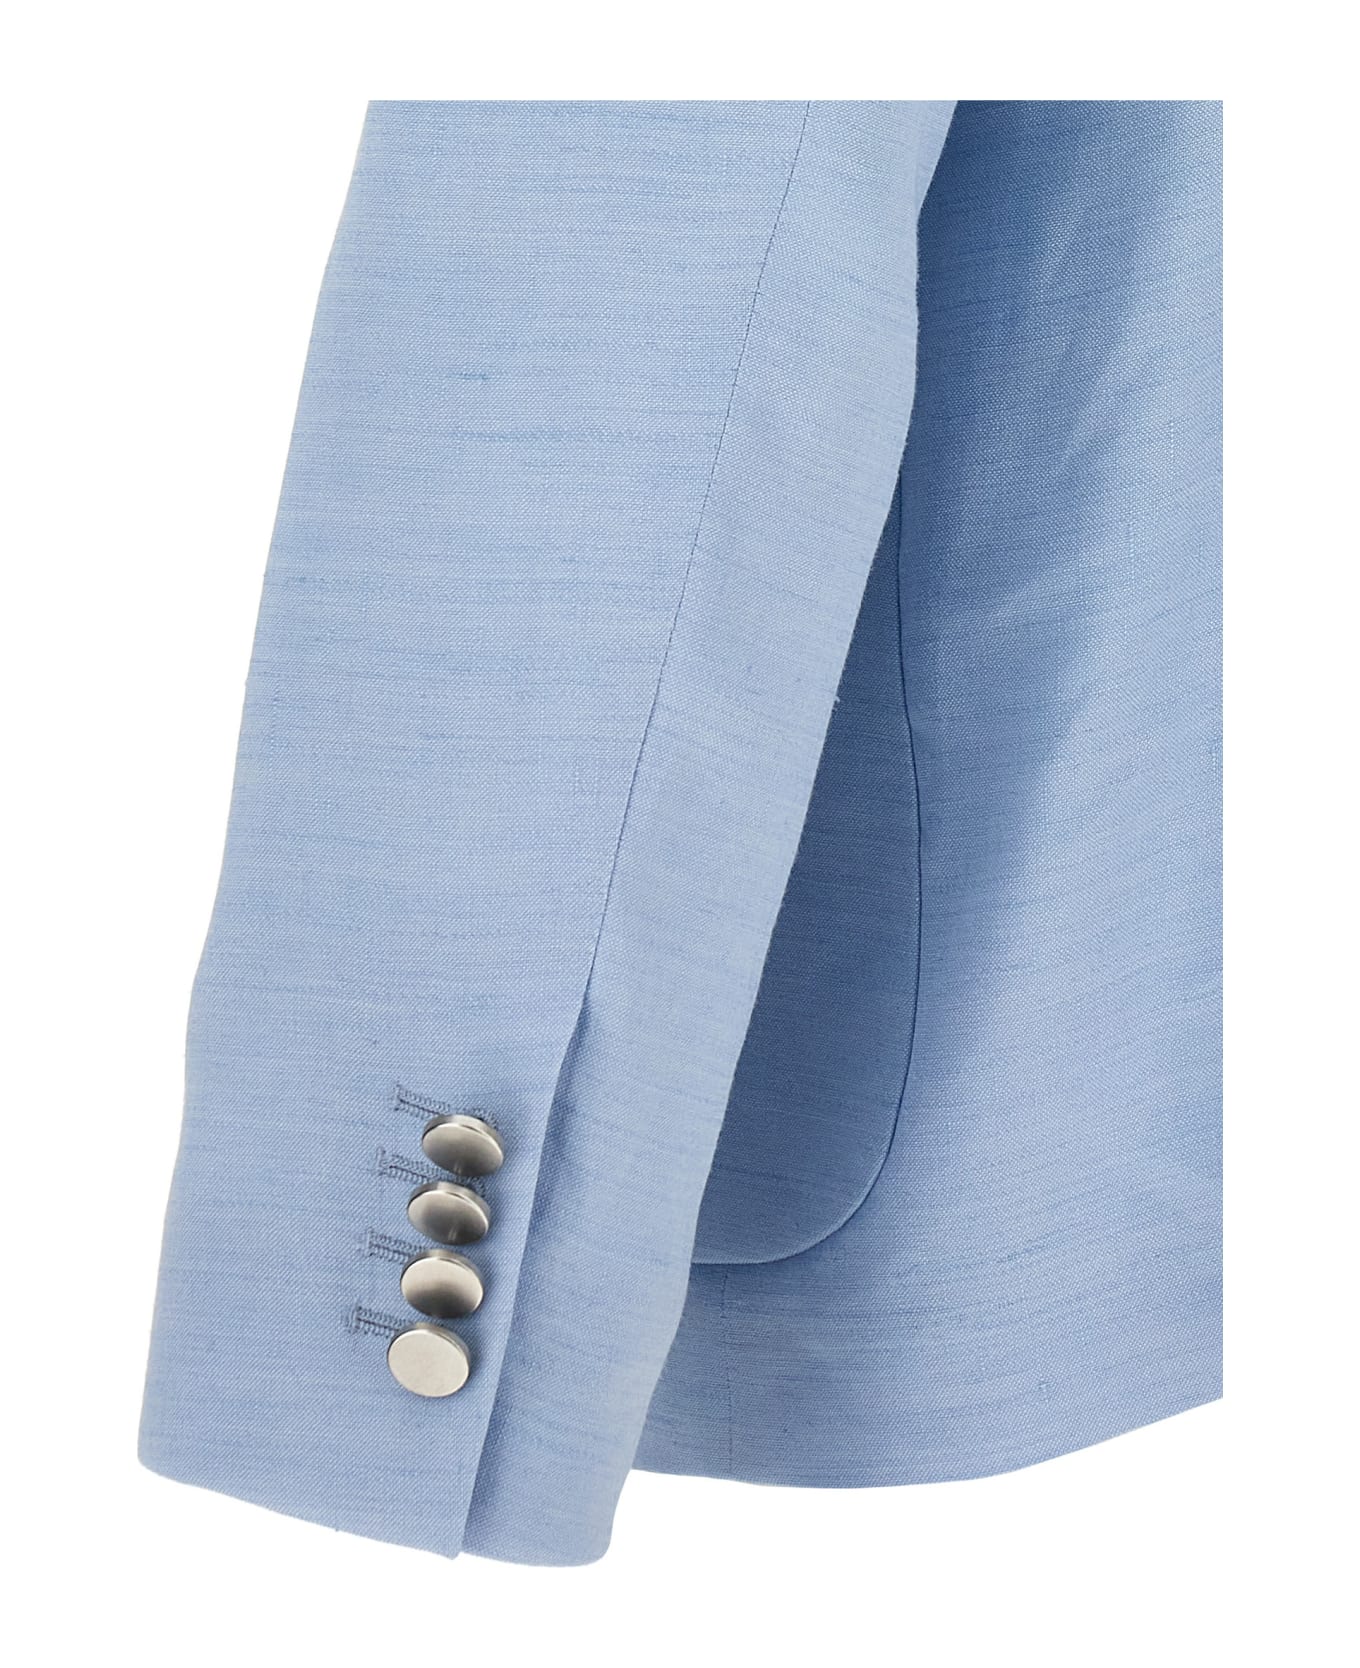 Tonello Double Breast Linen Blazer Jacket - Light Blue